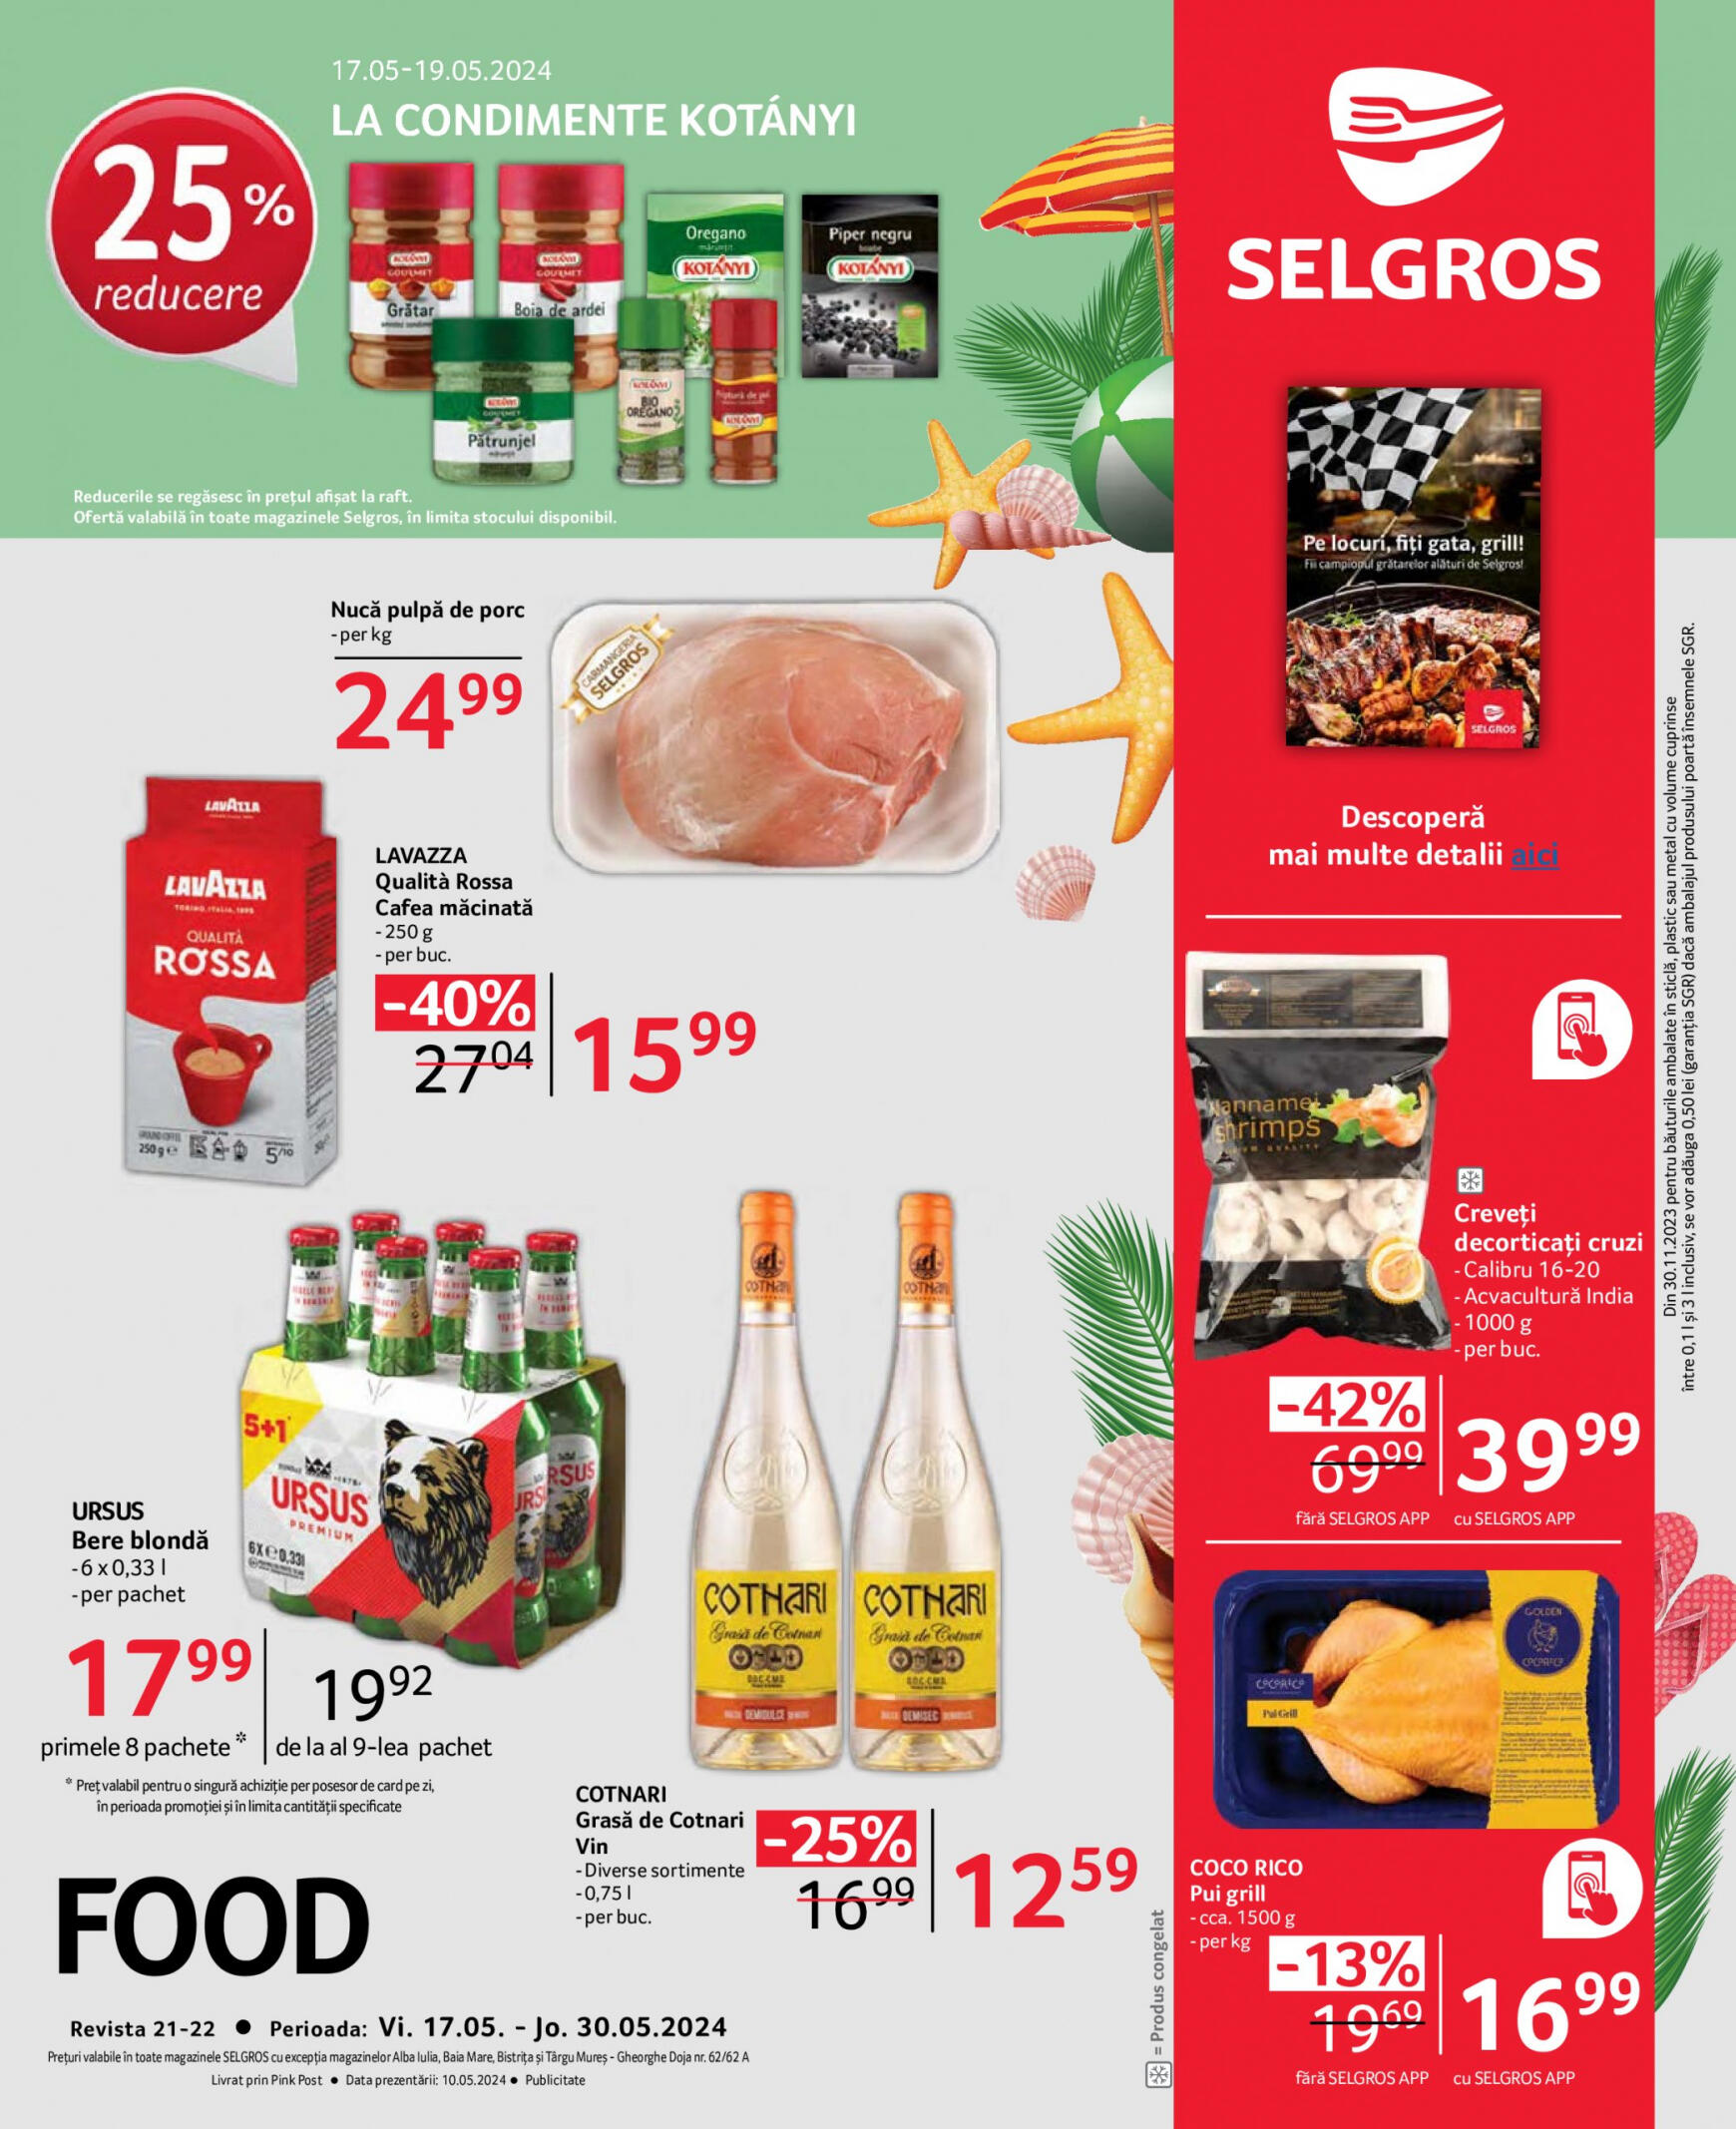 selgros - Catalog nou Selgros - Food 17.05. - 30.05.